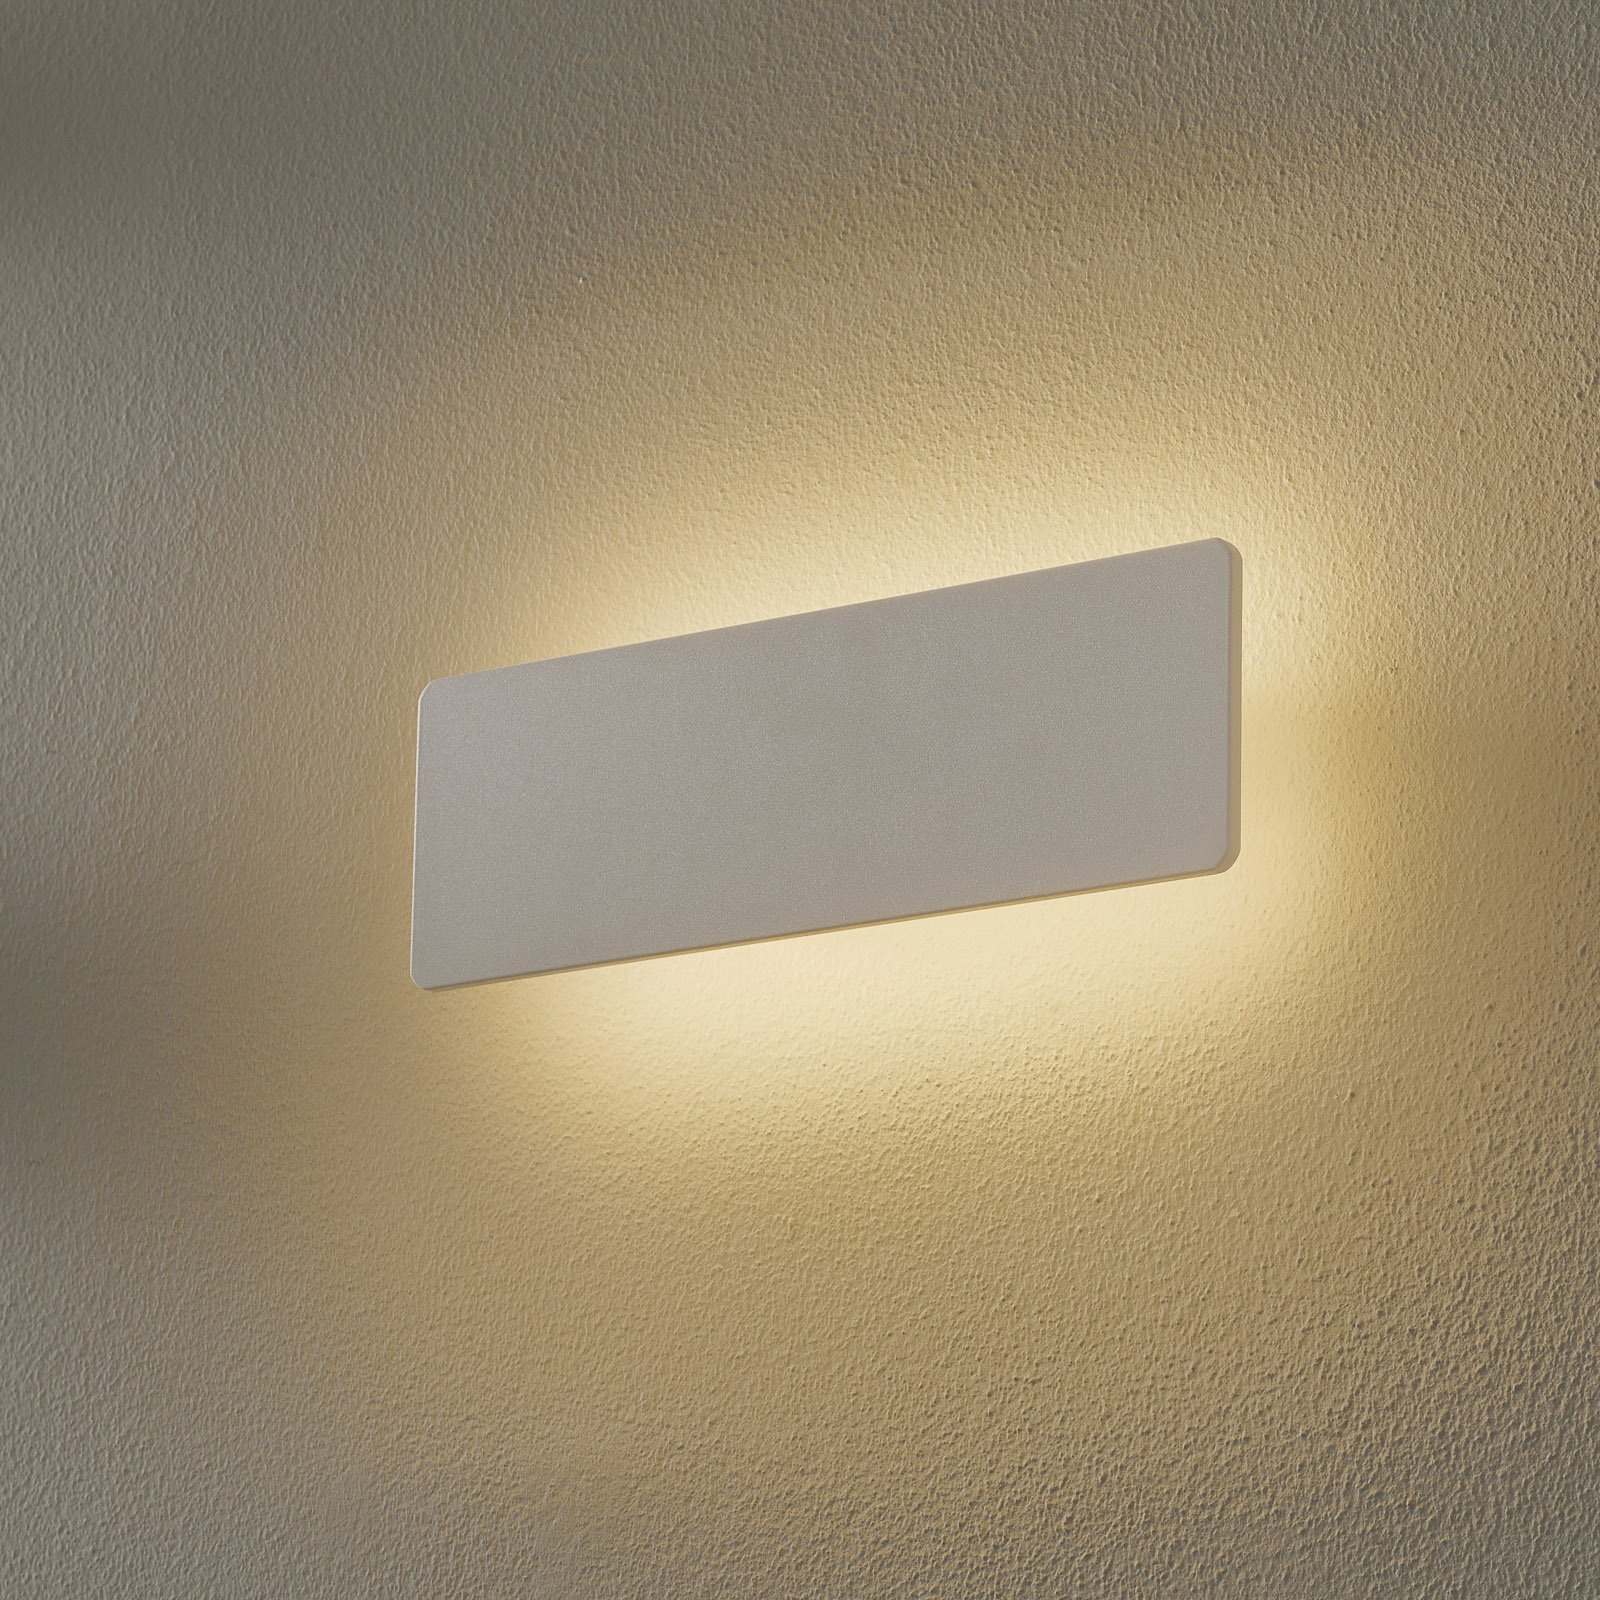 Aplique LED Zig Zag blanco, anchura 29 cm